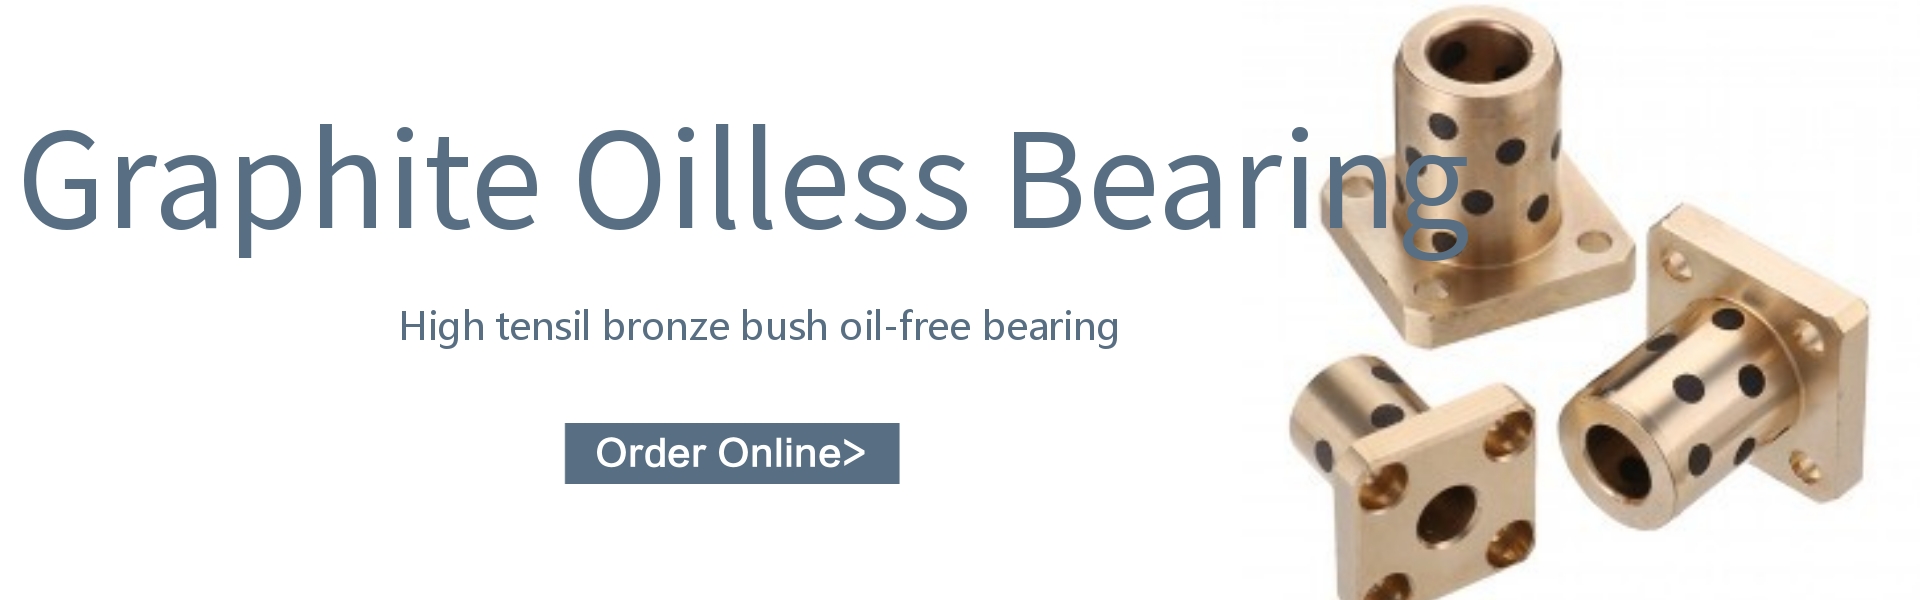 High tensil bronze bush oil-free bearing graphite oilless bearing 